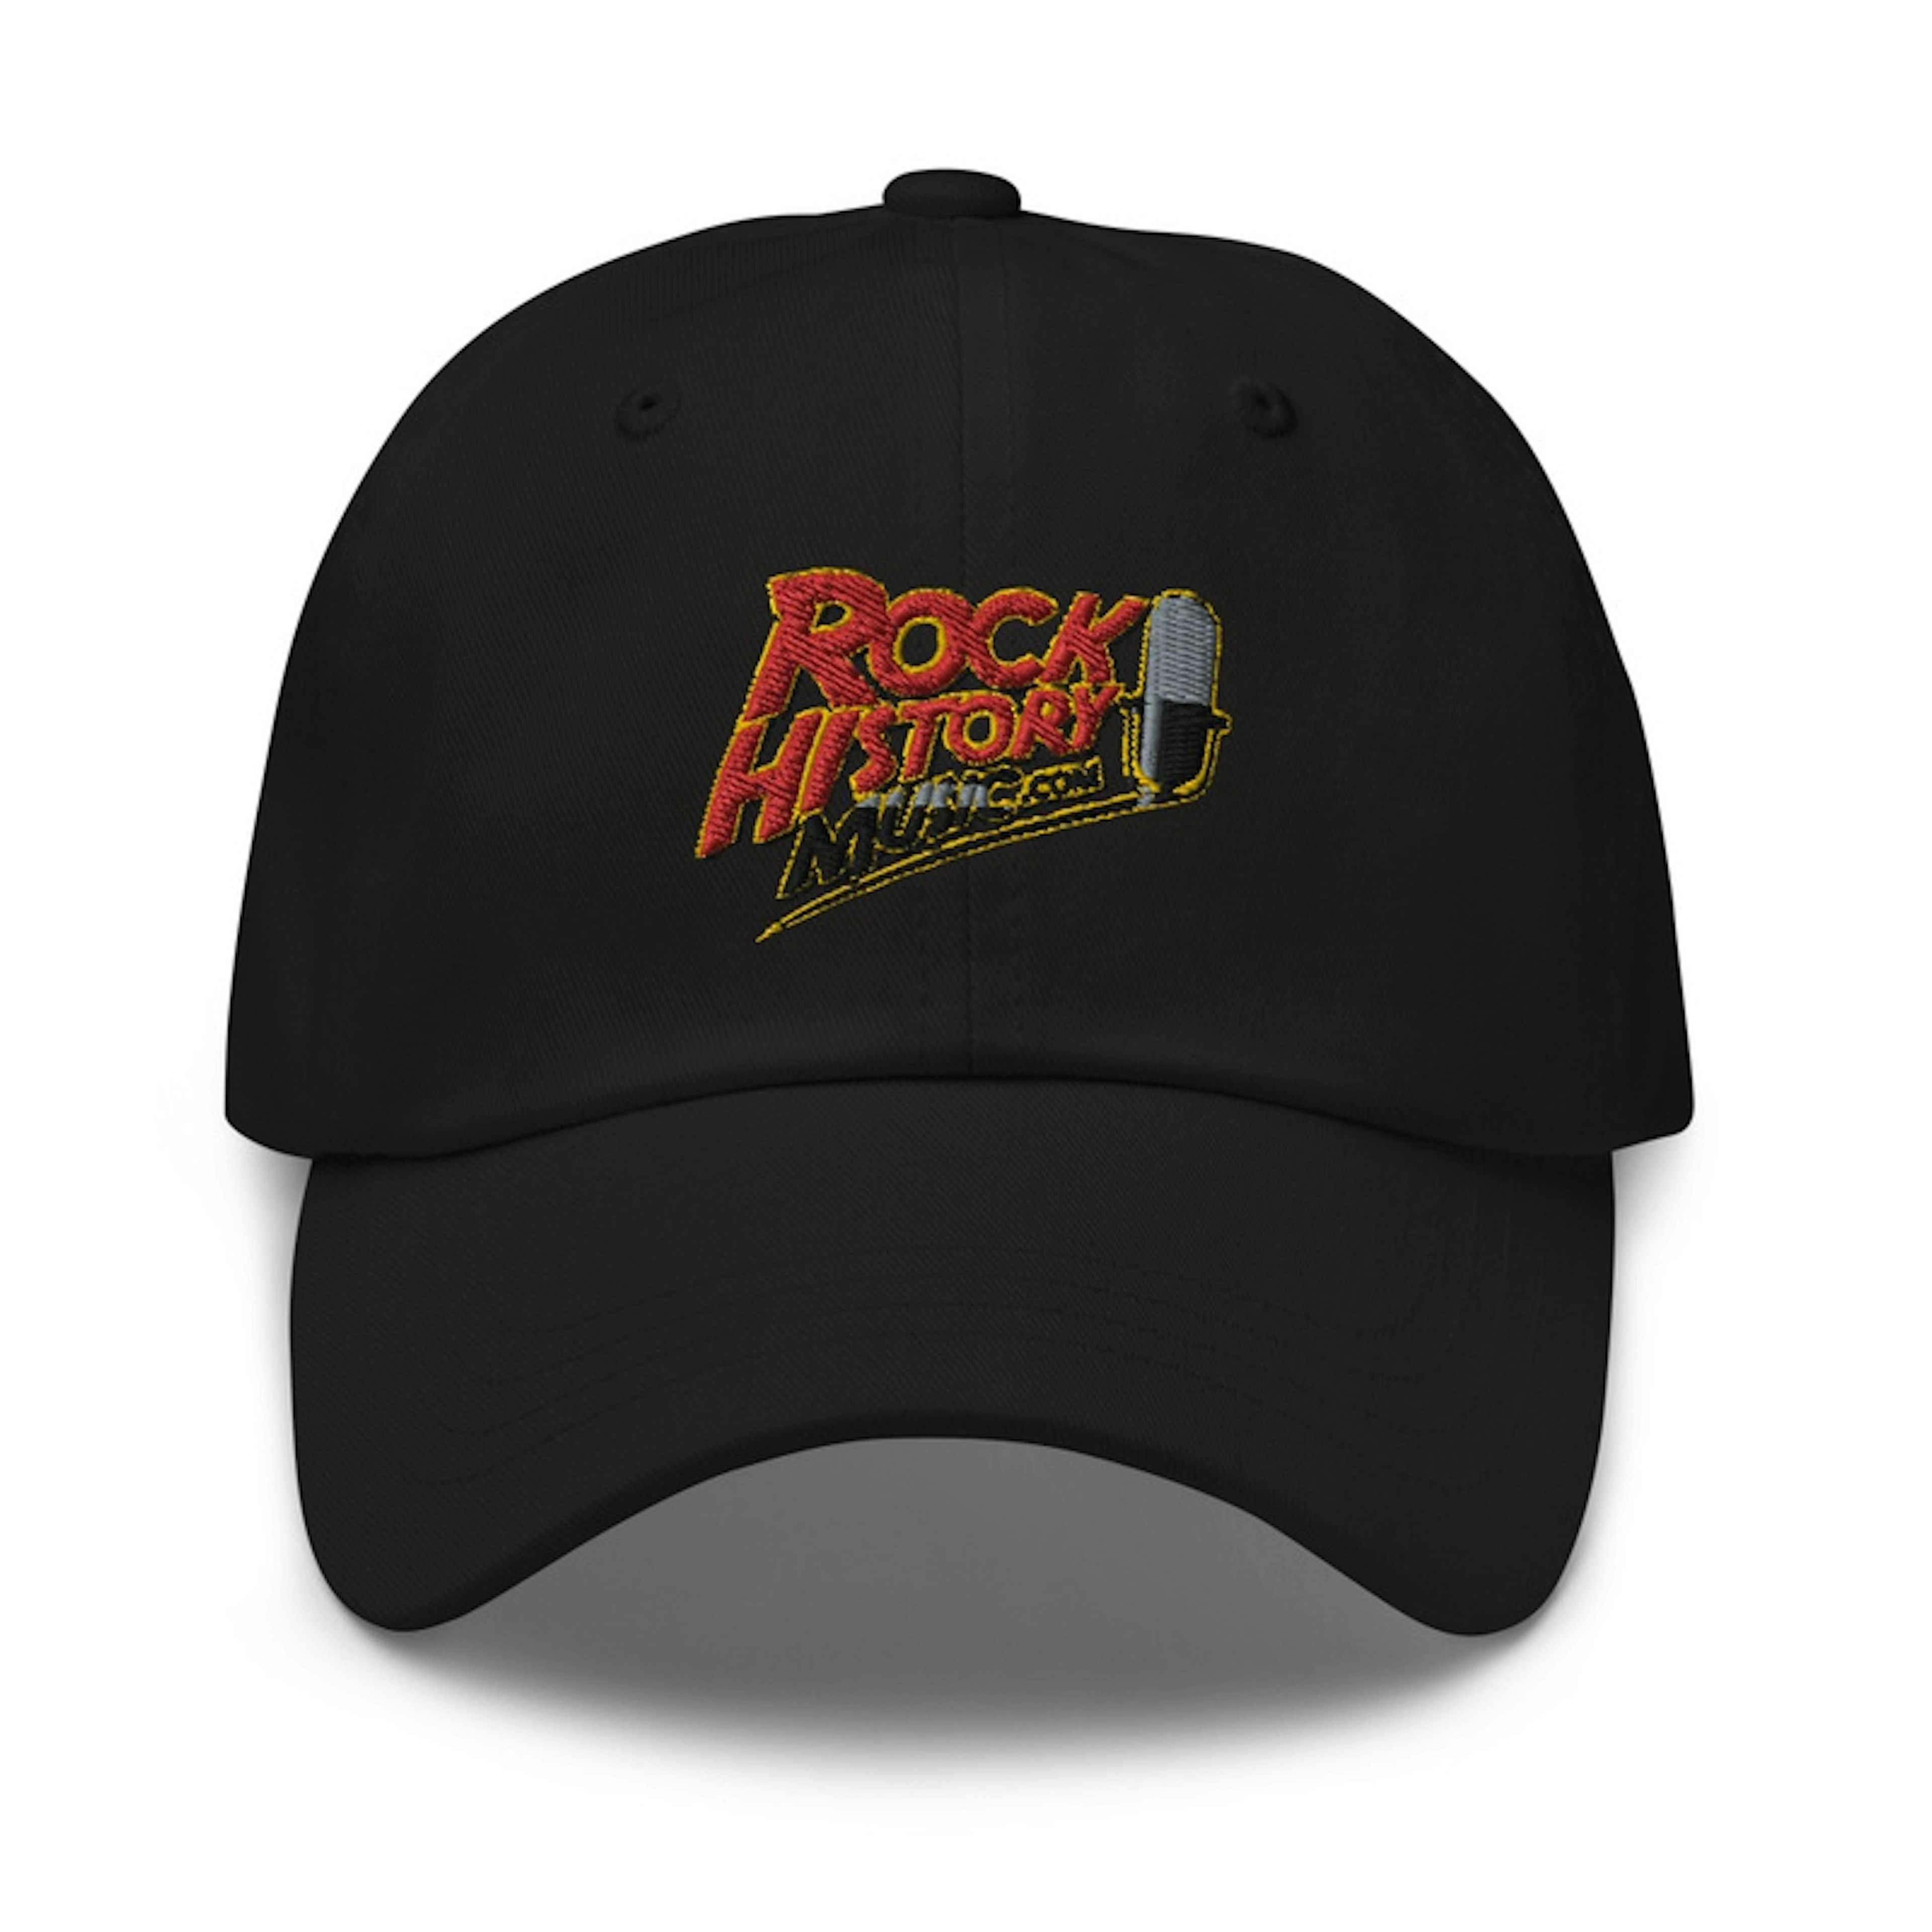 Rock History Music Hat